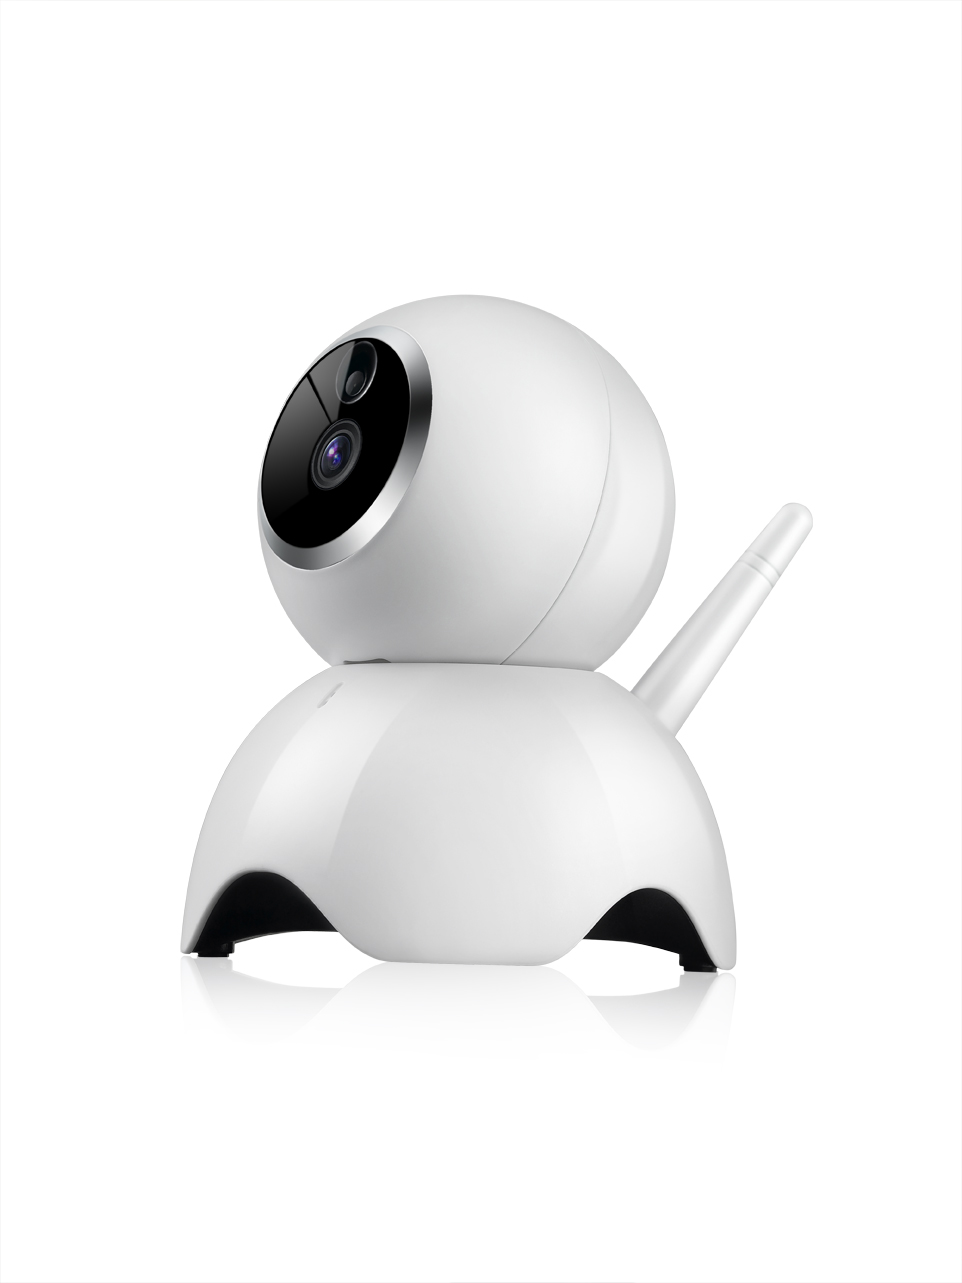 1080P wireless cool dog HD intelligent monitoring network camera motion detection voice intercom